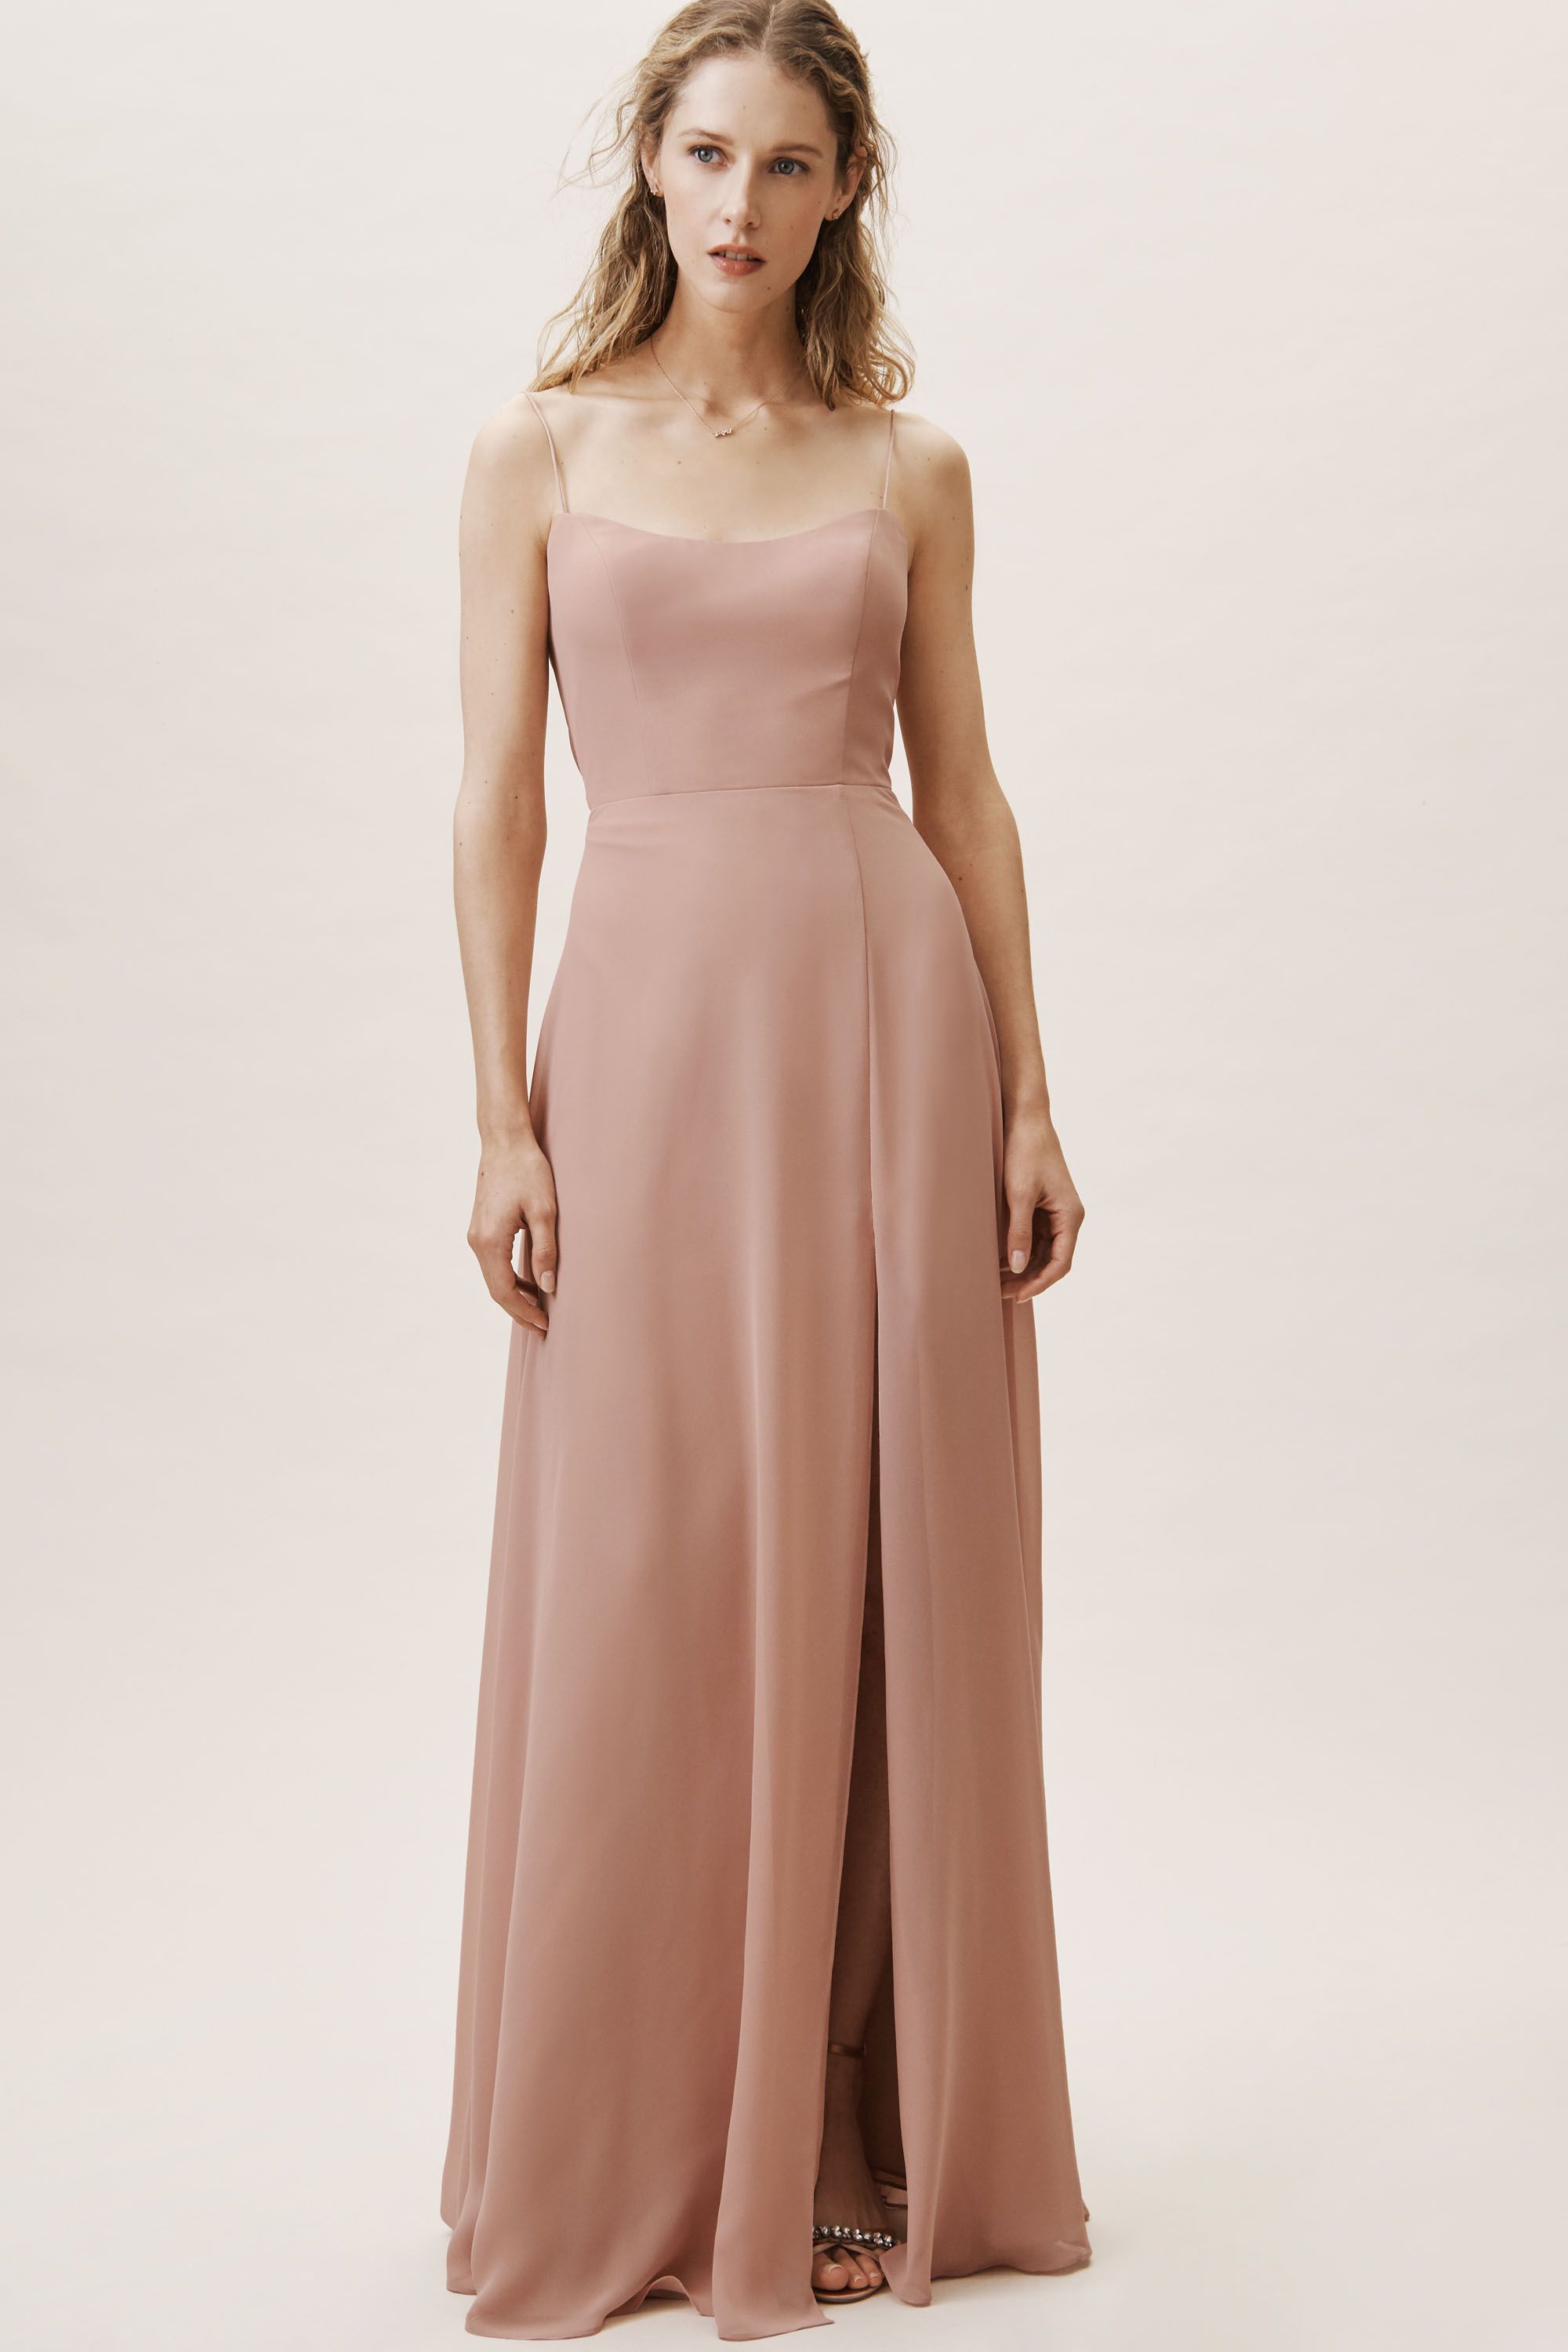 dusky pink bridesmaid dresses ebay